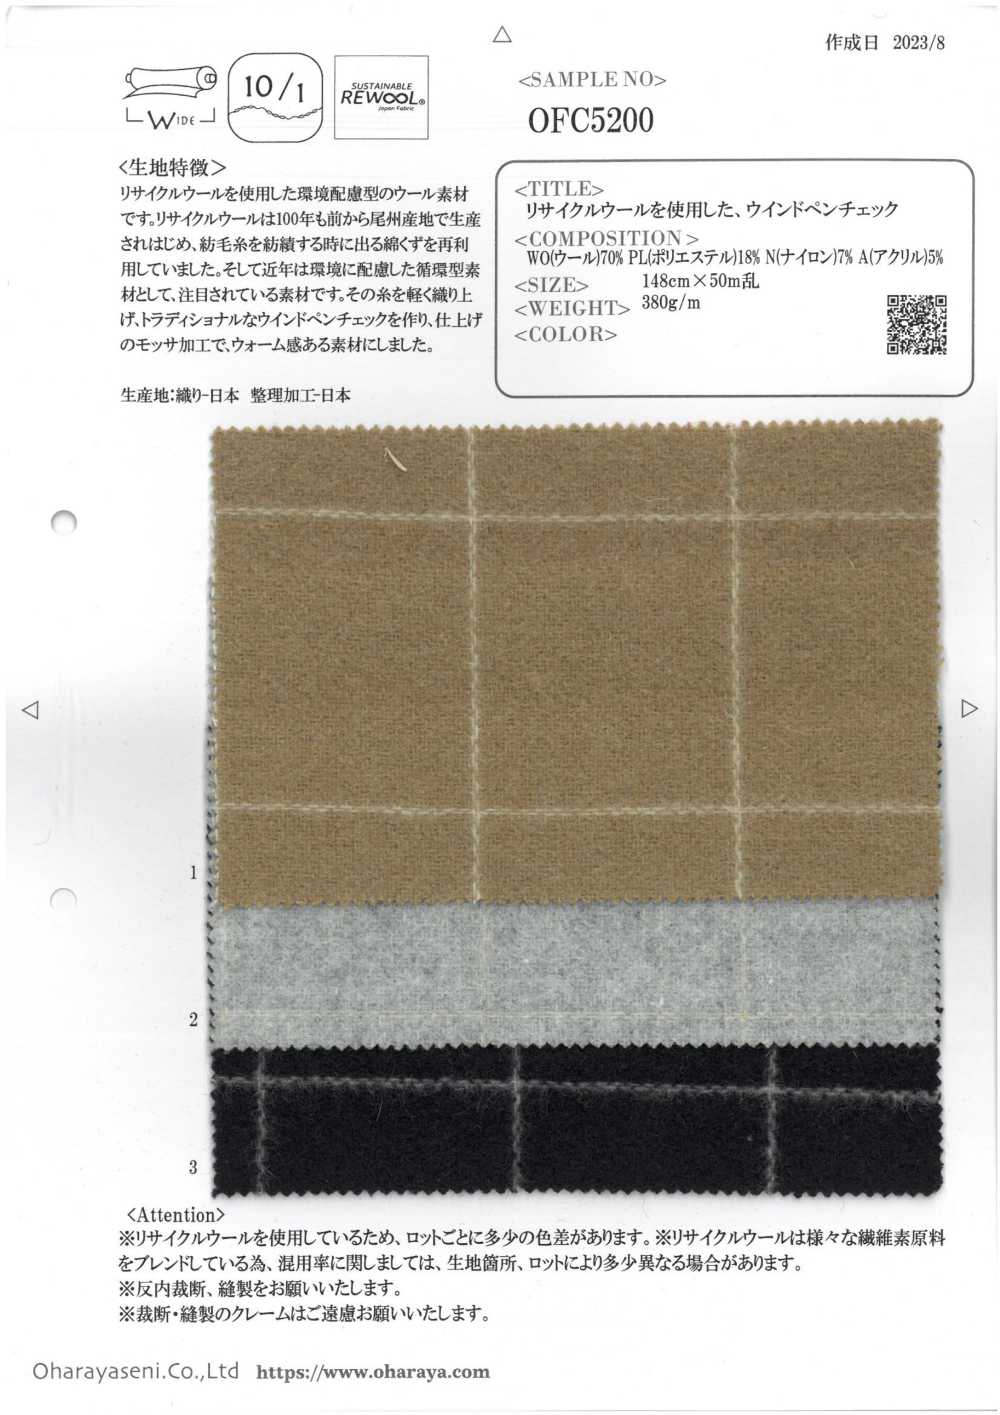 OFC5200 Prueba De Bolígrafo De Viento Con Lana Reciclada[Fabrica Textil] Oharayaseni